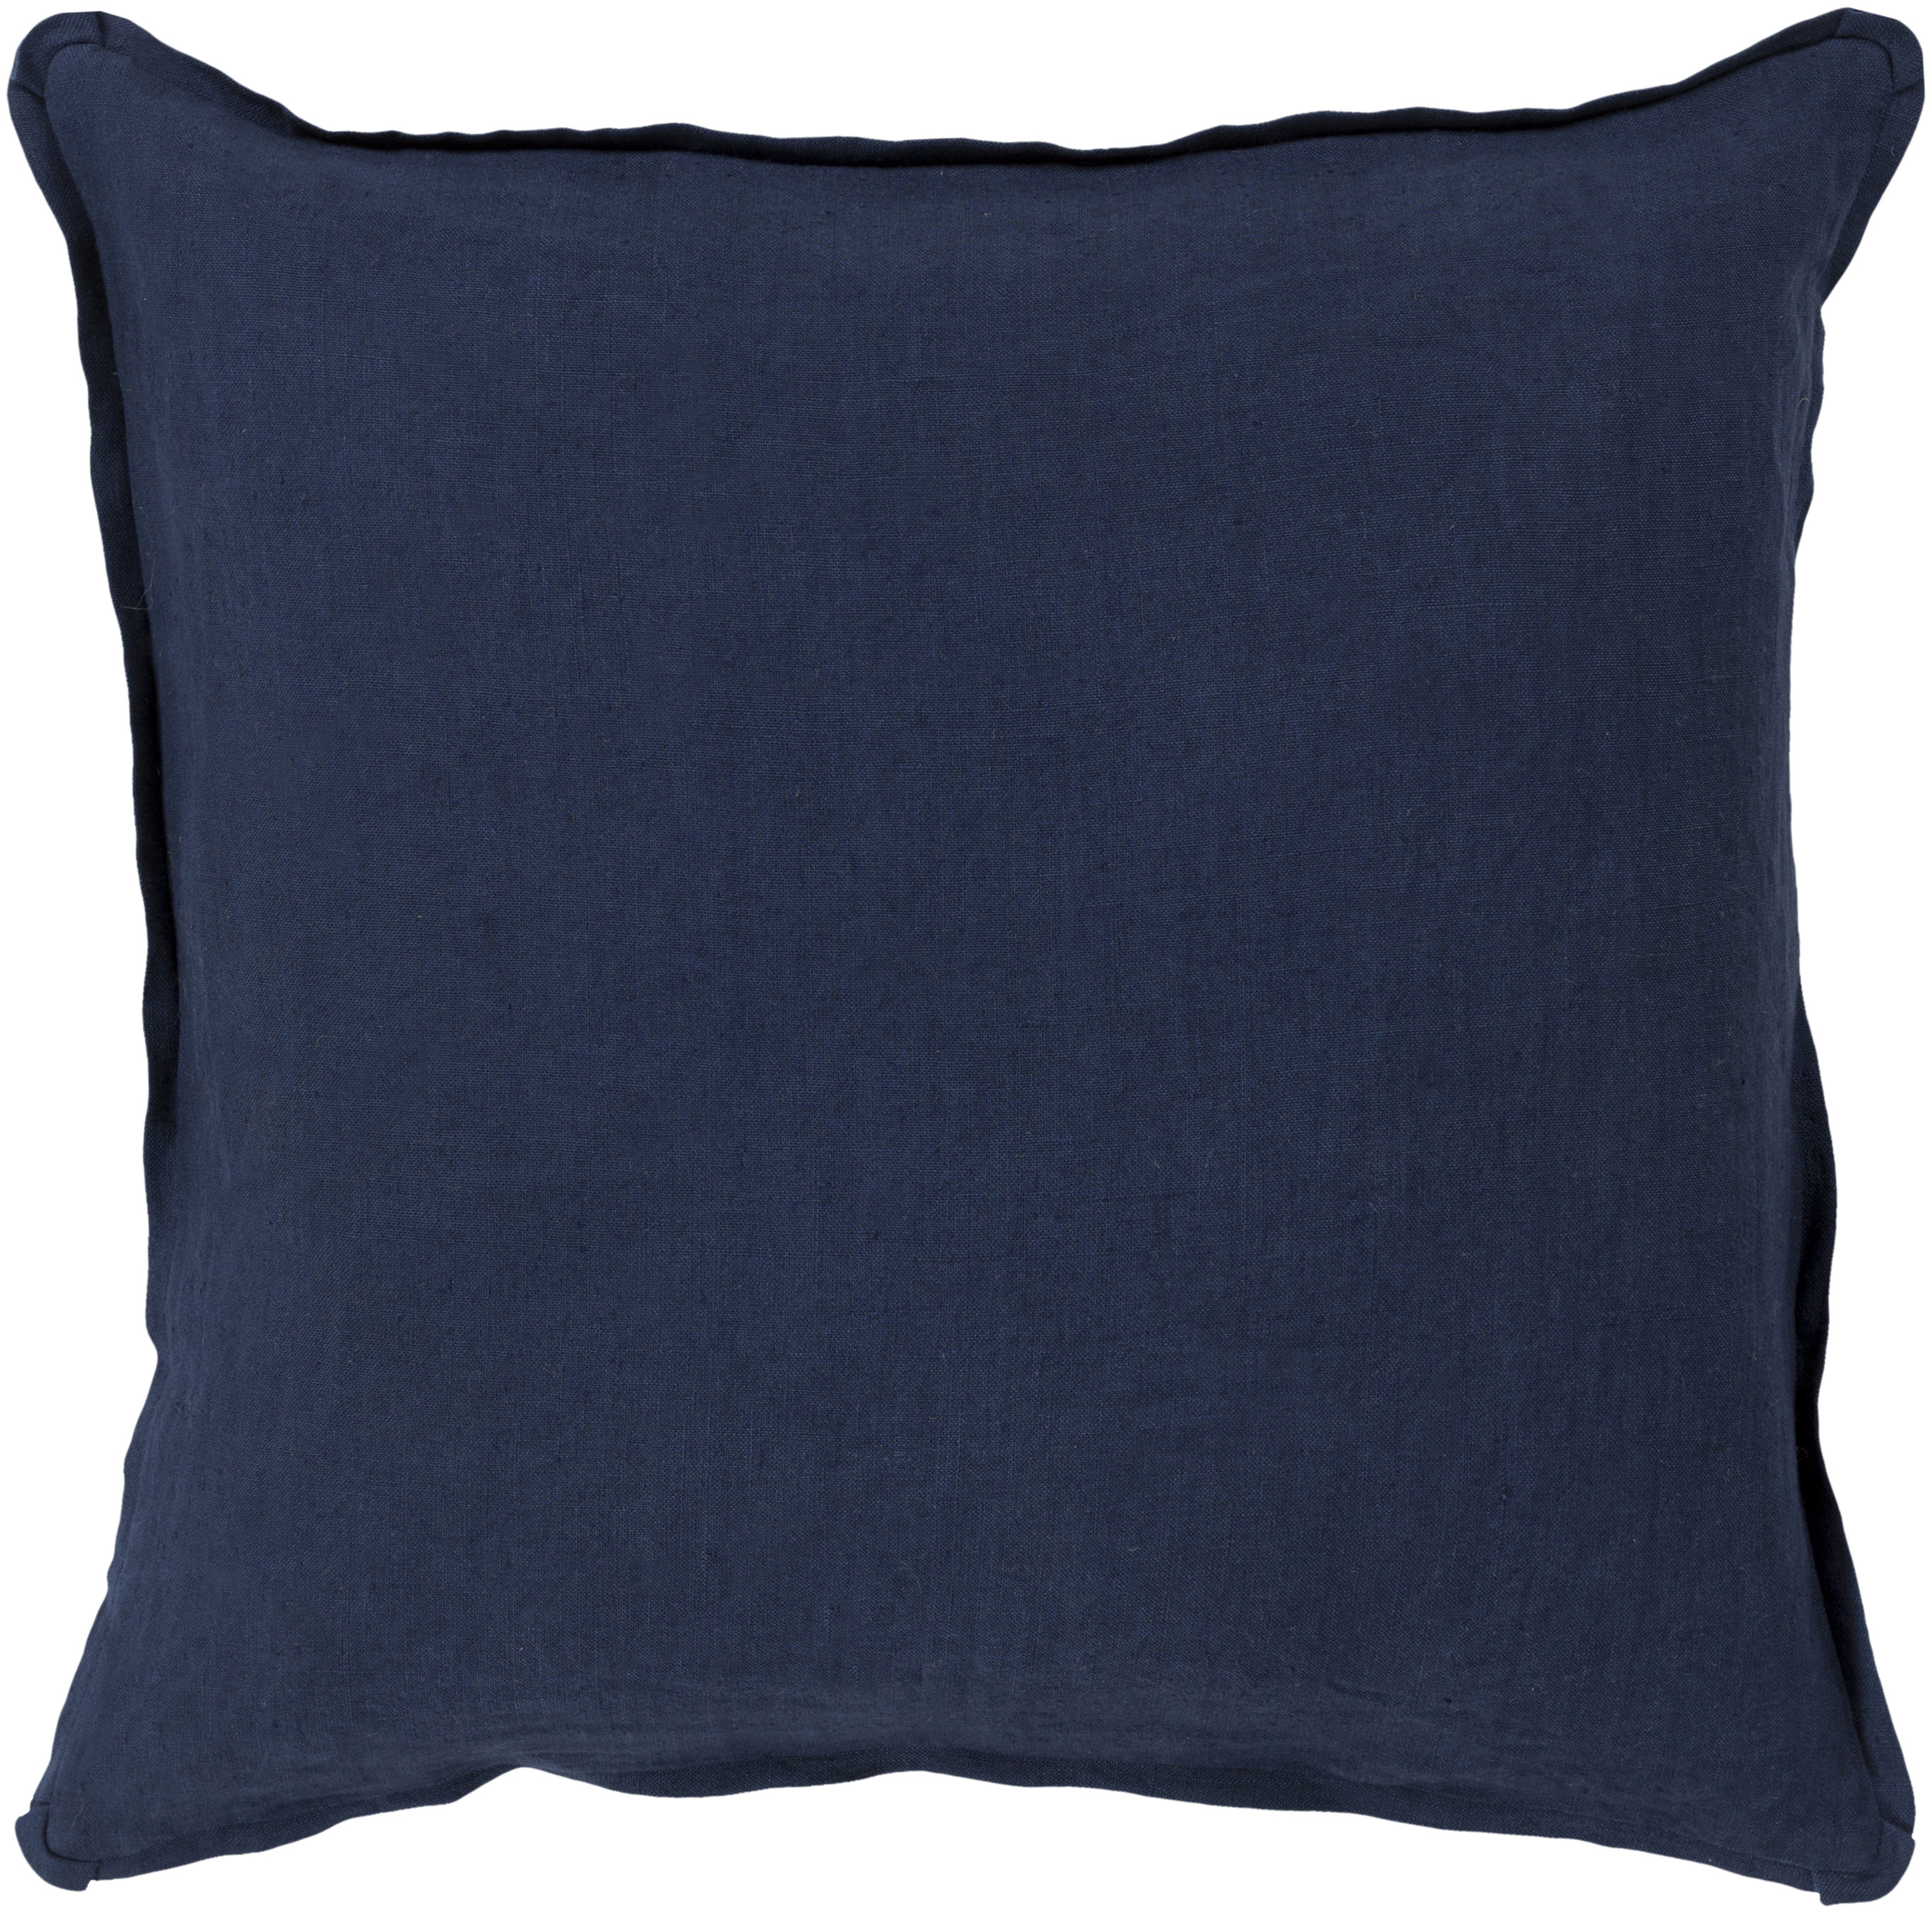 Solid Linen Pillow, Navy, 20" x 20" - Surya